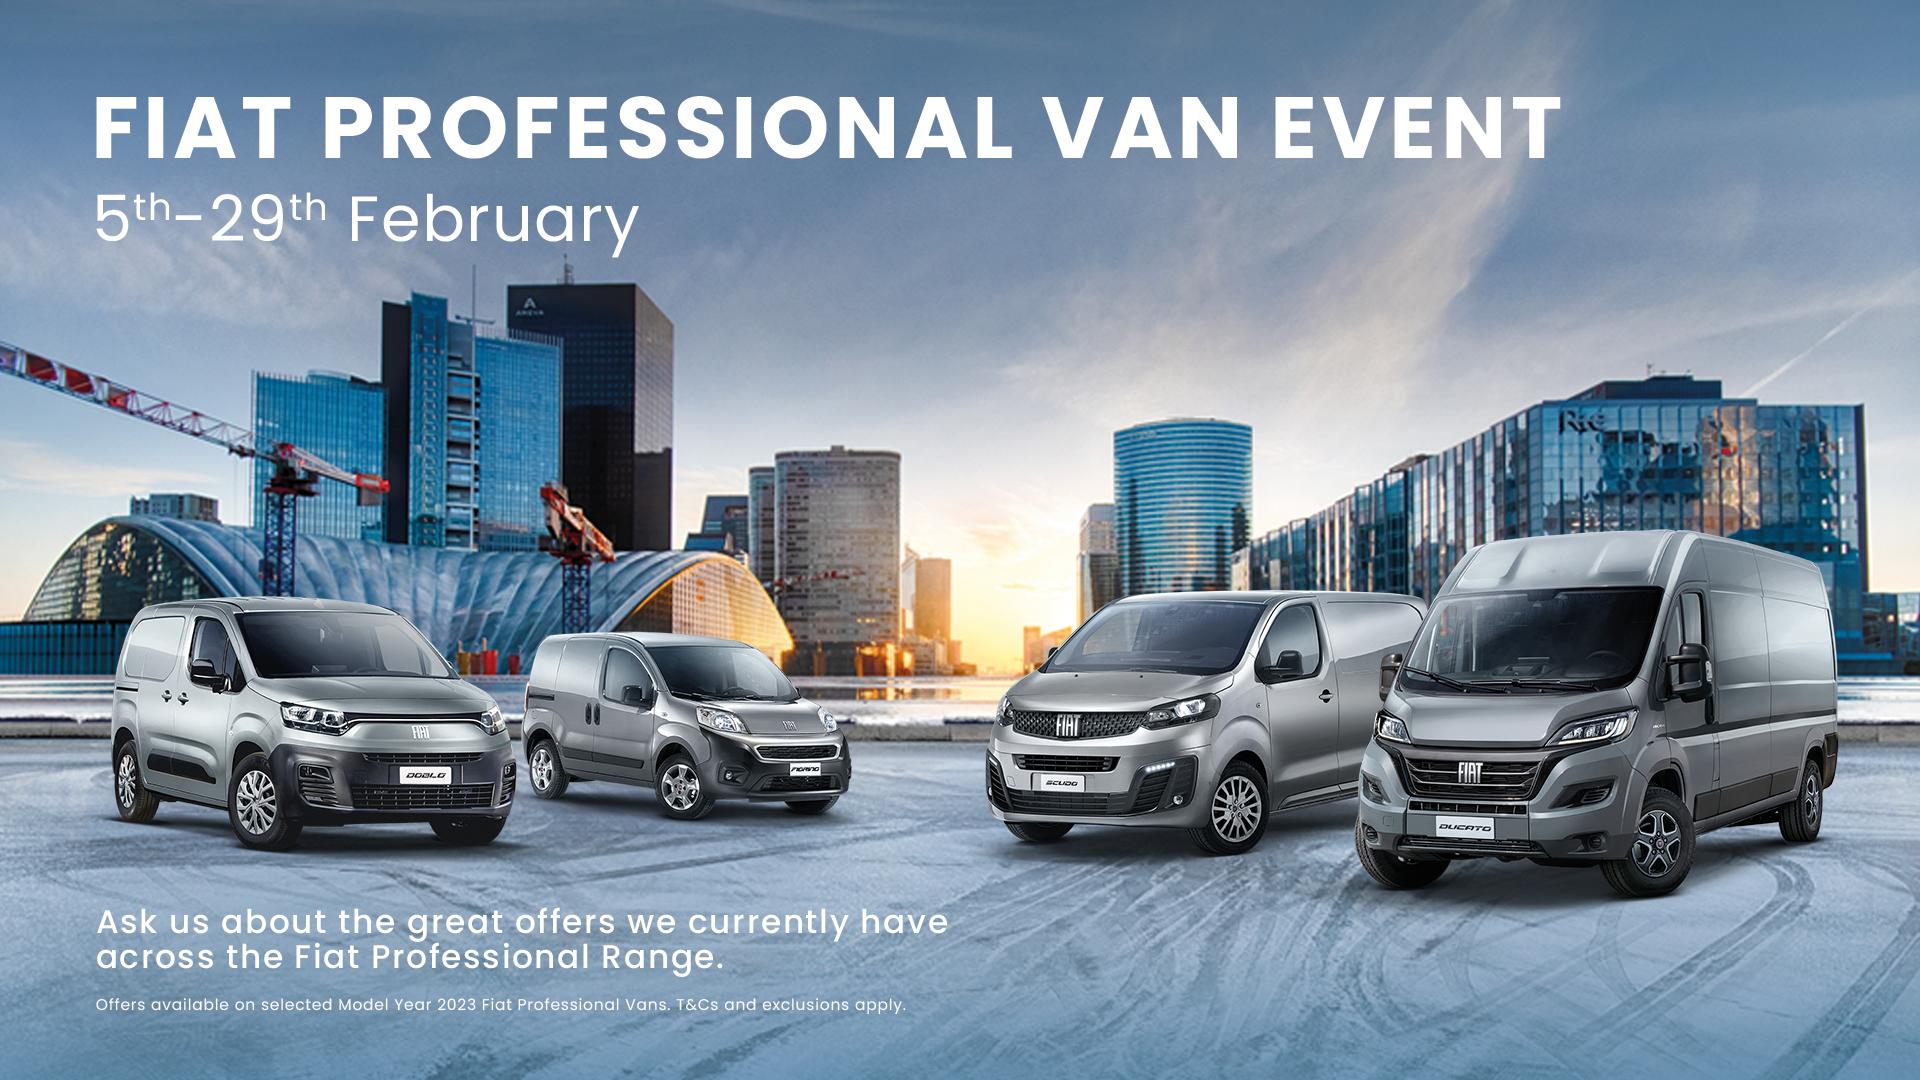 Fiat Professional Van Event comes to North East Truck & Van 